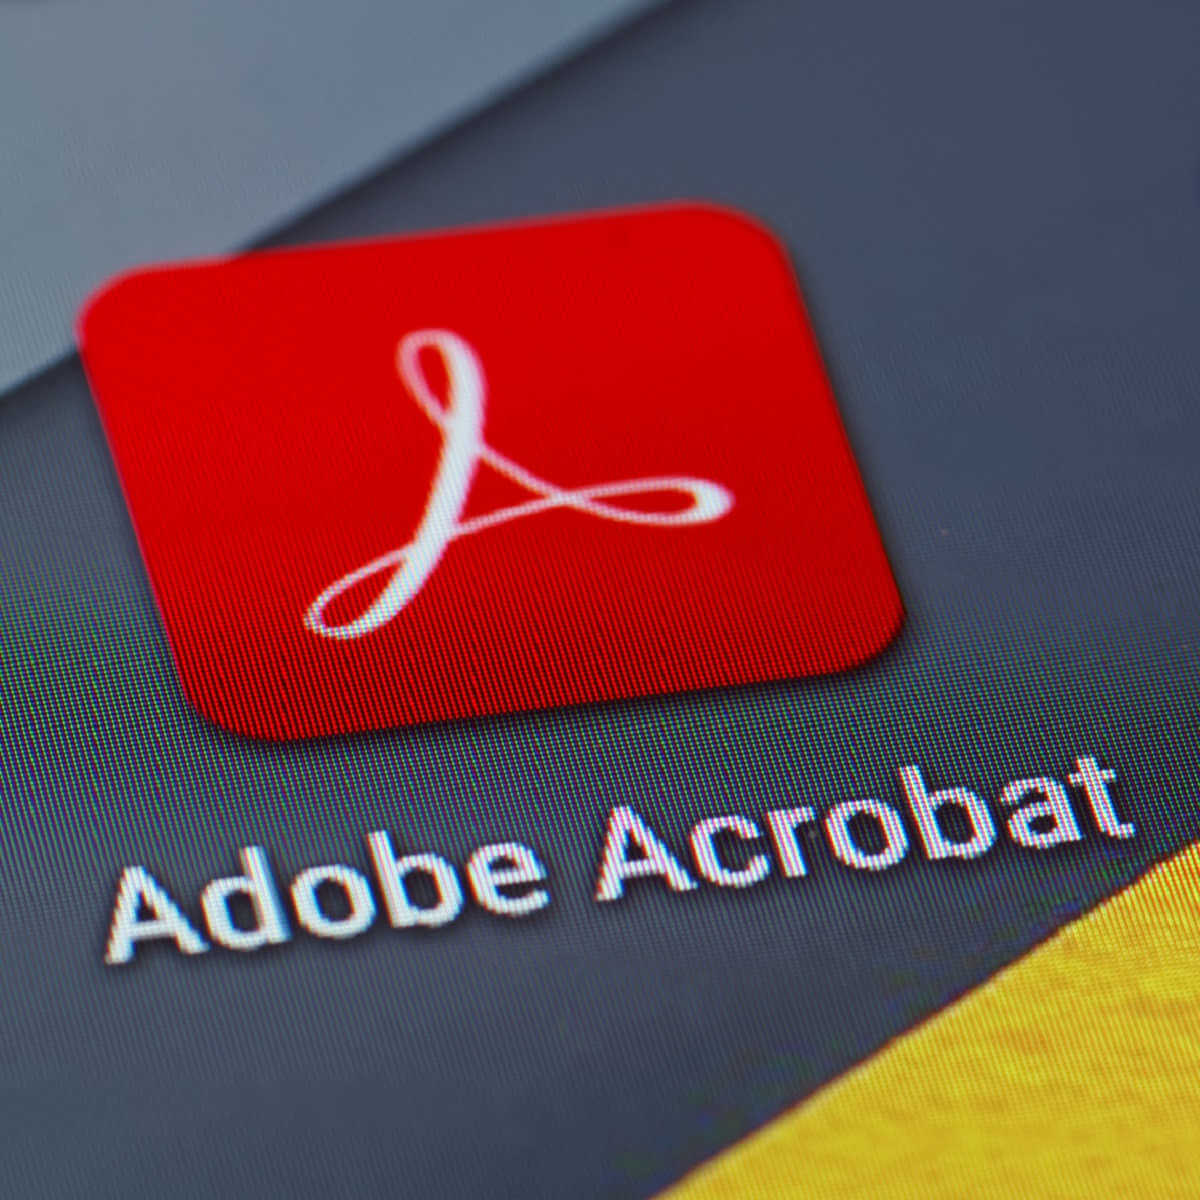 Adobe Acrobat を新しいコンピューターに移行する - 画面上の Adob​​e Acrobat ロゴ